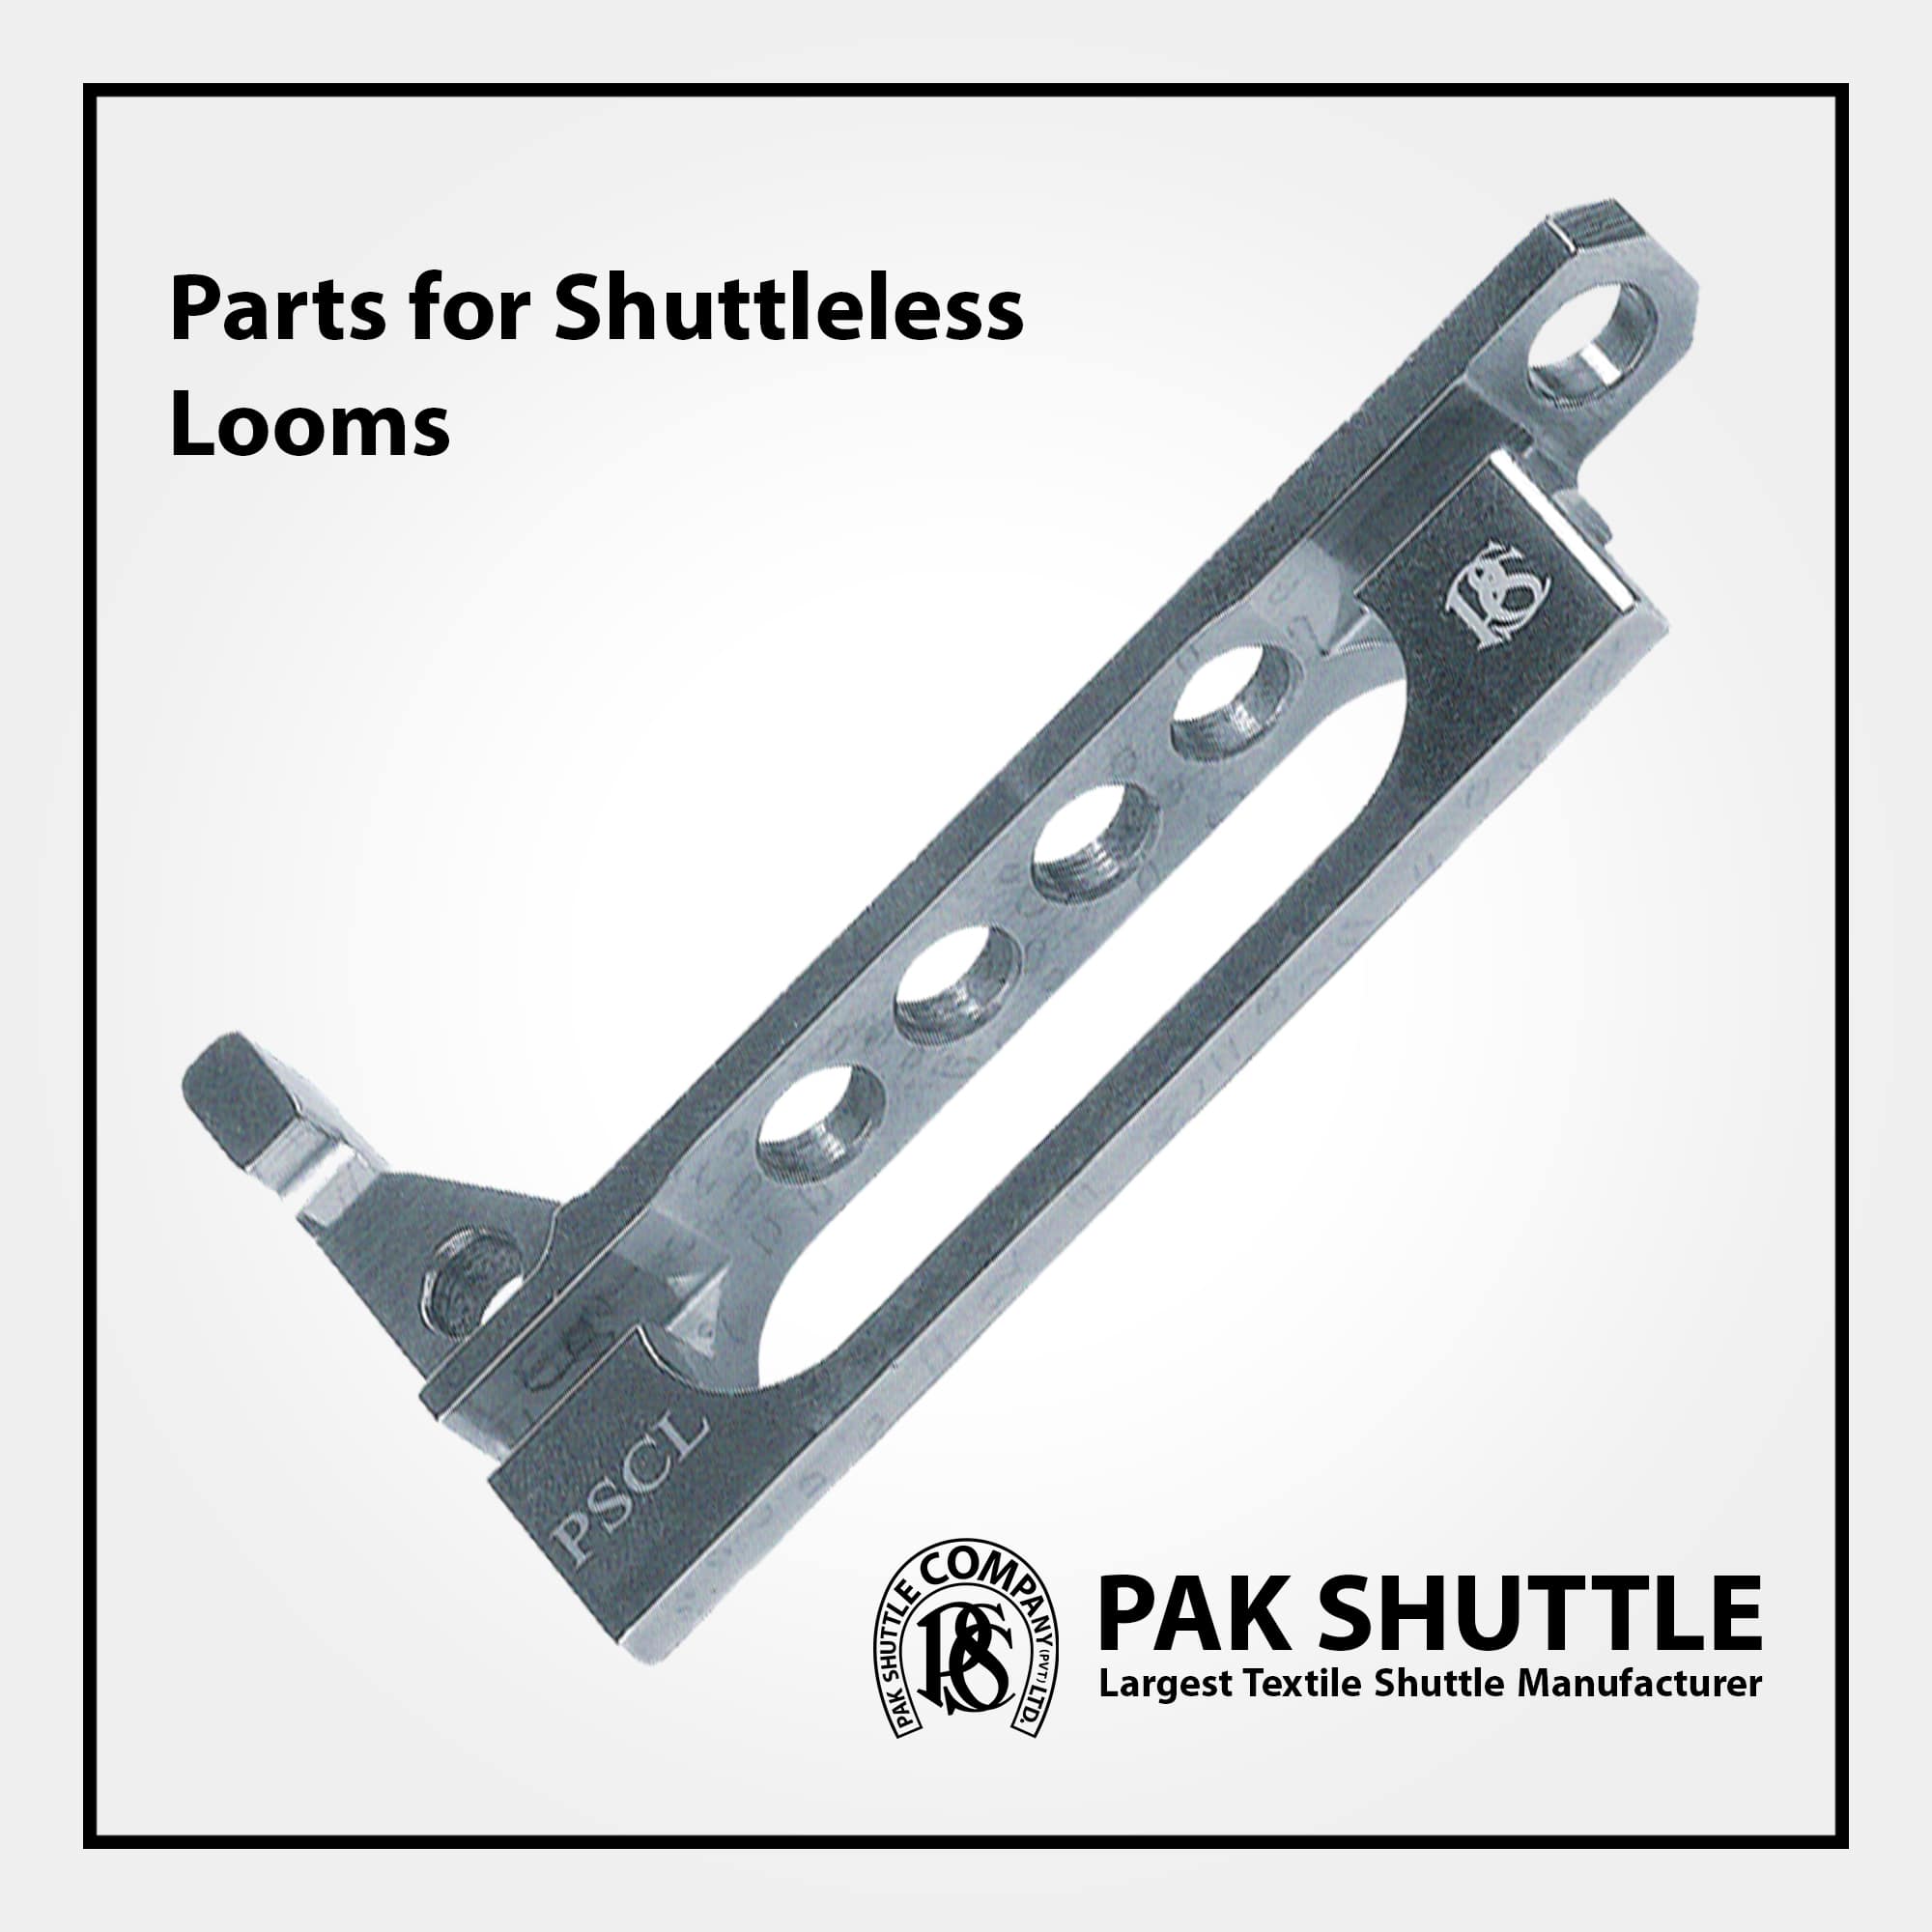 Shuttleless Loom Parts by Pak Shuttle Company Pvt Ltd.